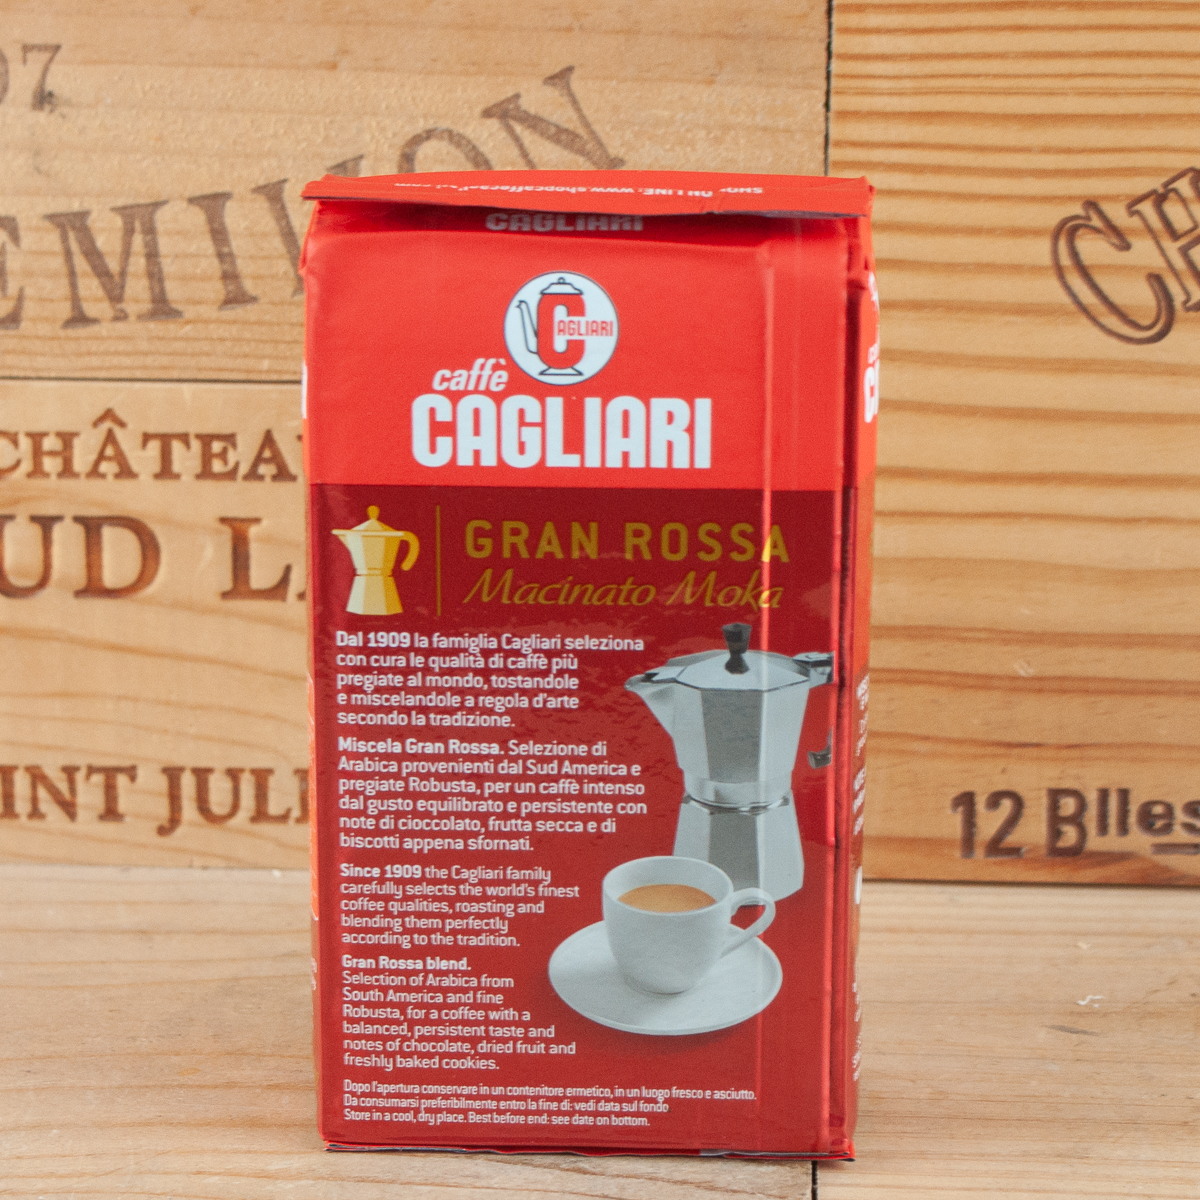 Espresso Gran Rossa grinded Caffé cagliari